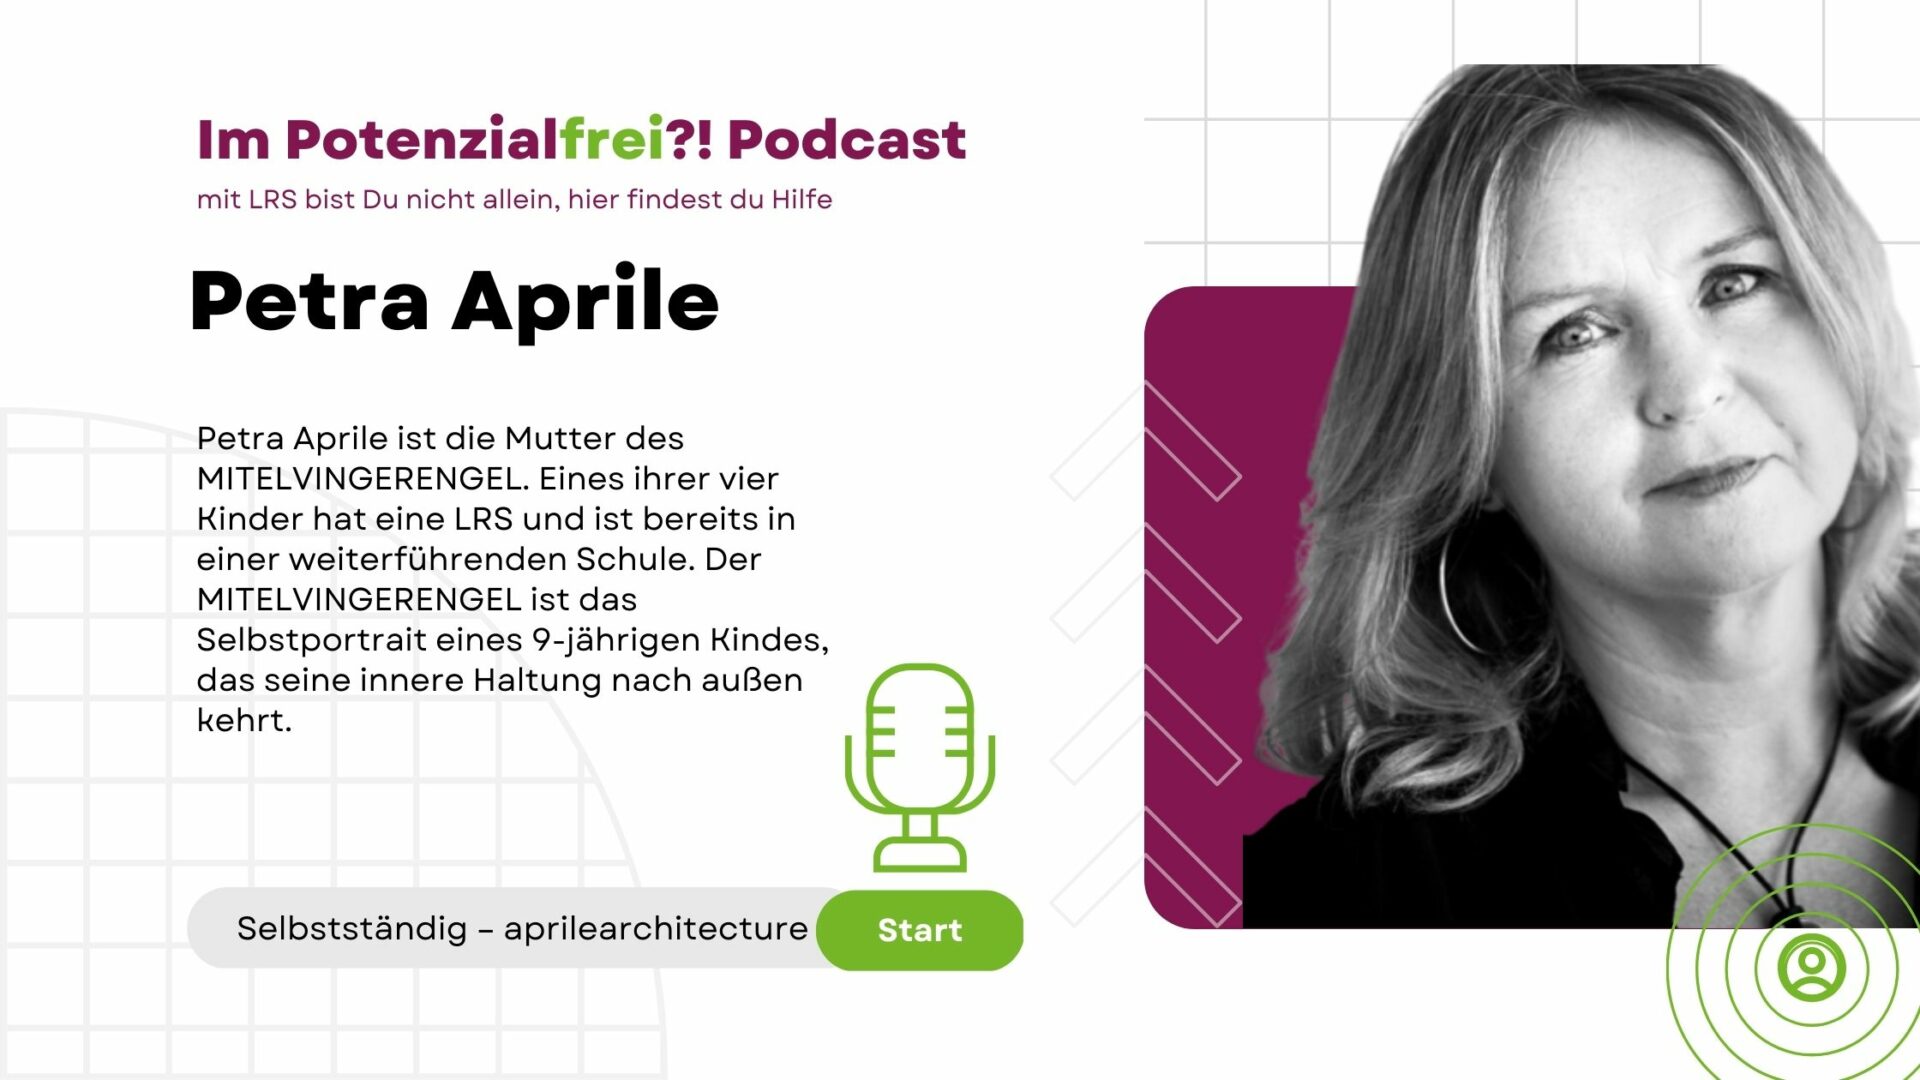 Petra Aprile – Selbstständig – aprilearchitecture, im Potenzialfrei Podcast